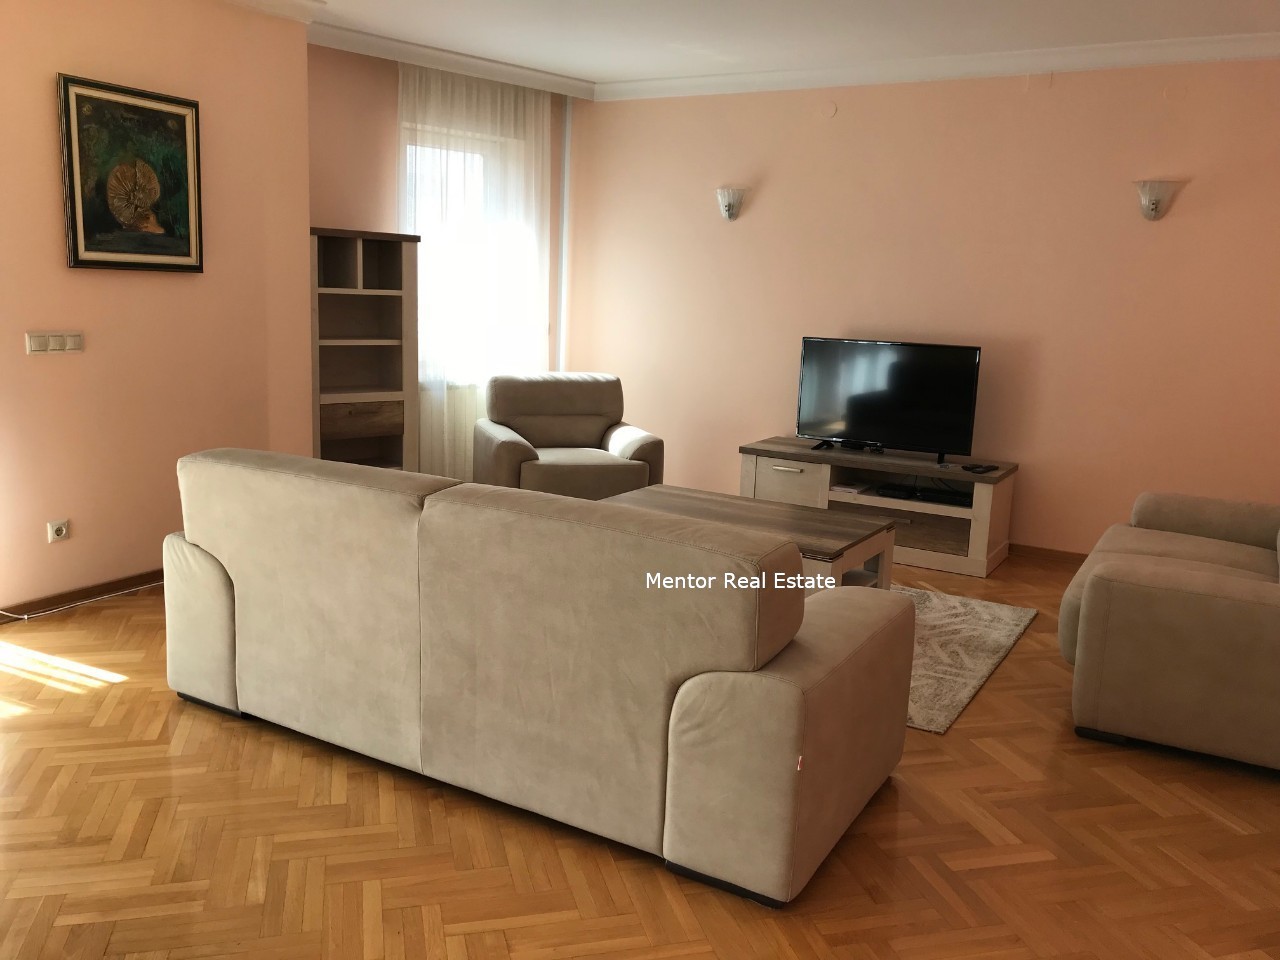 Vračar 160sqm luxury apartment for rent